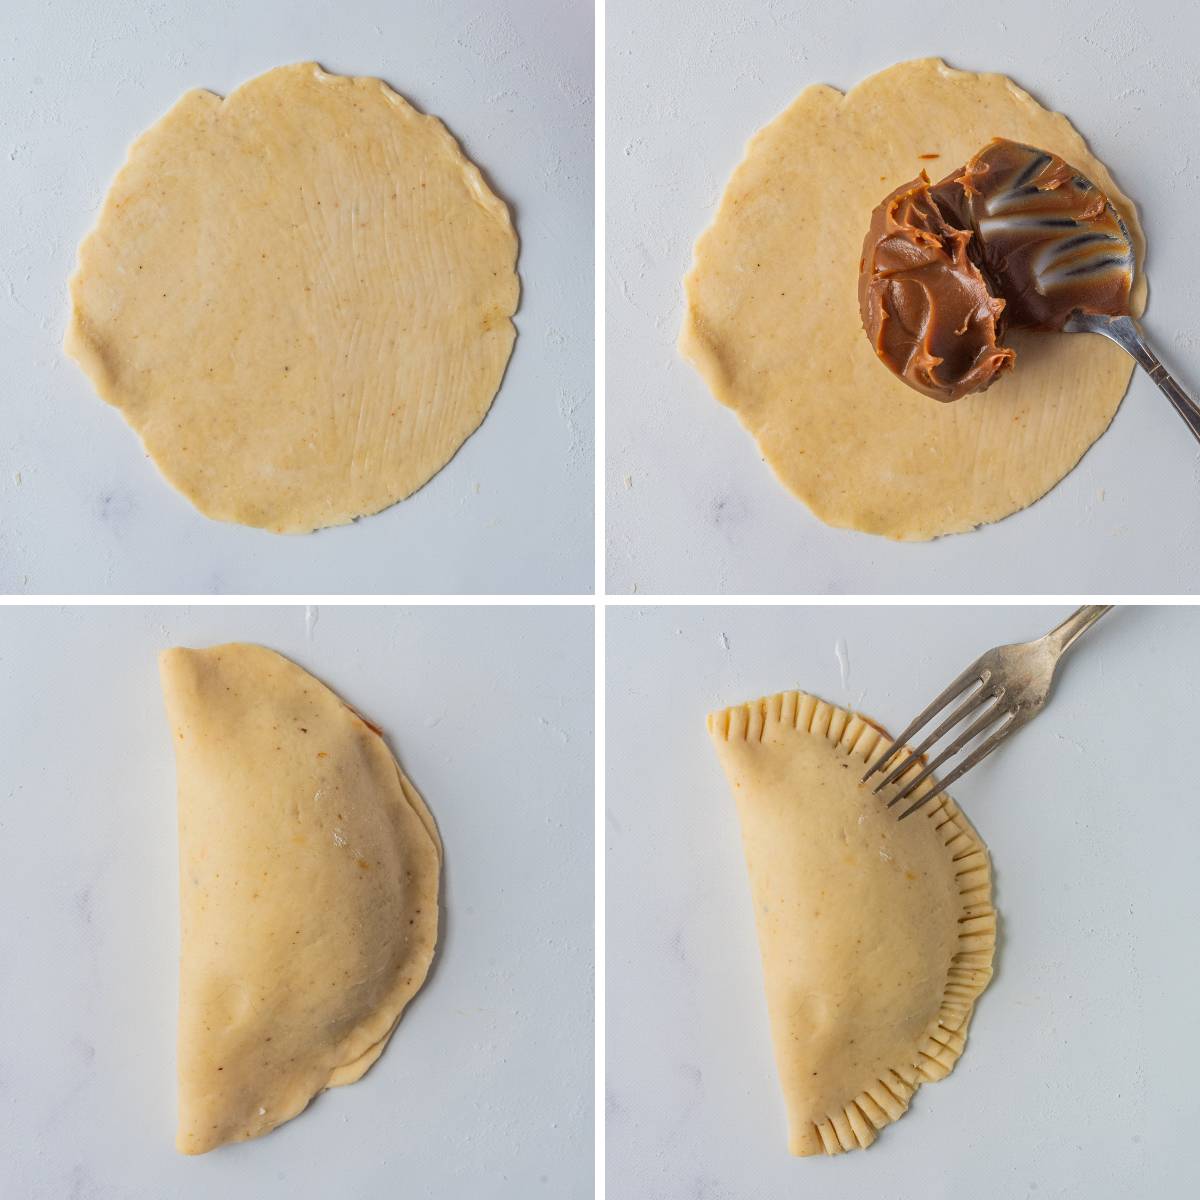 Adding the caramel to the dough disk and assembling the empanadas.